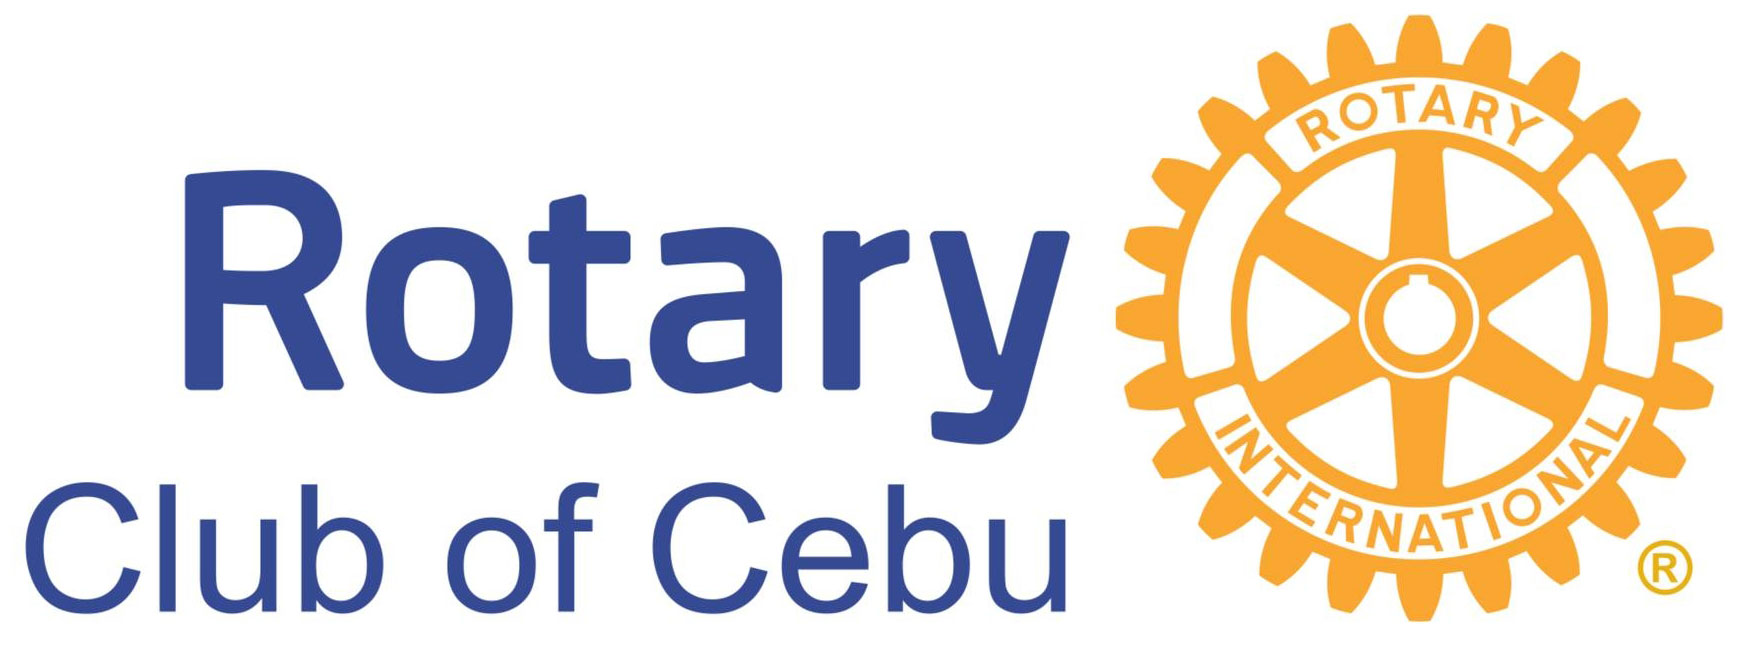 Rotary Club of Cebu